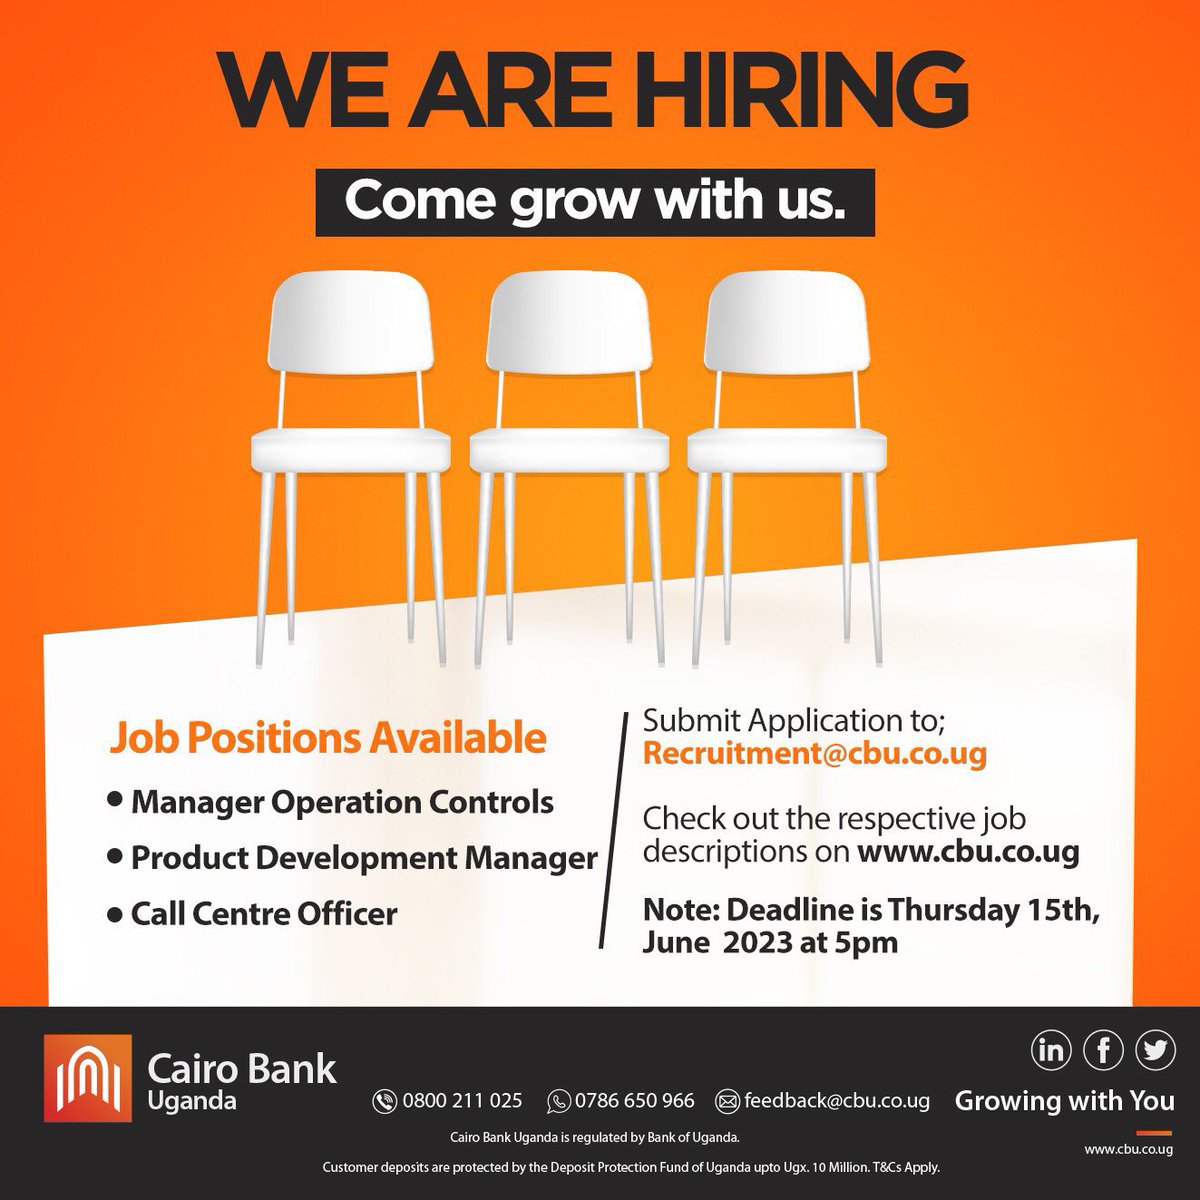 Cairo Bank @CairoBank is hiring.